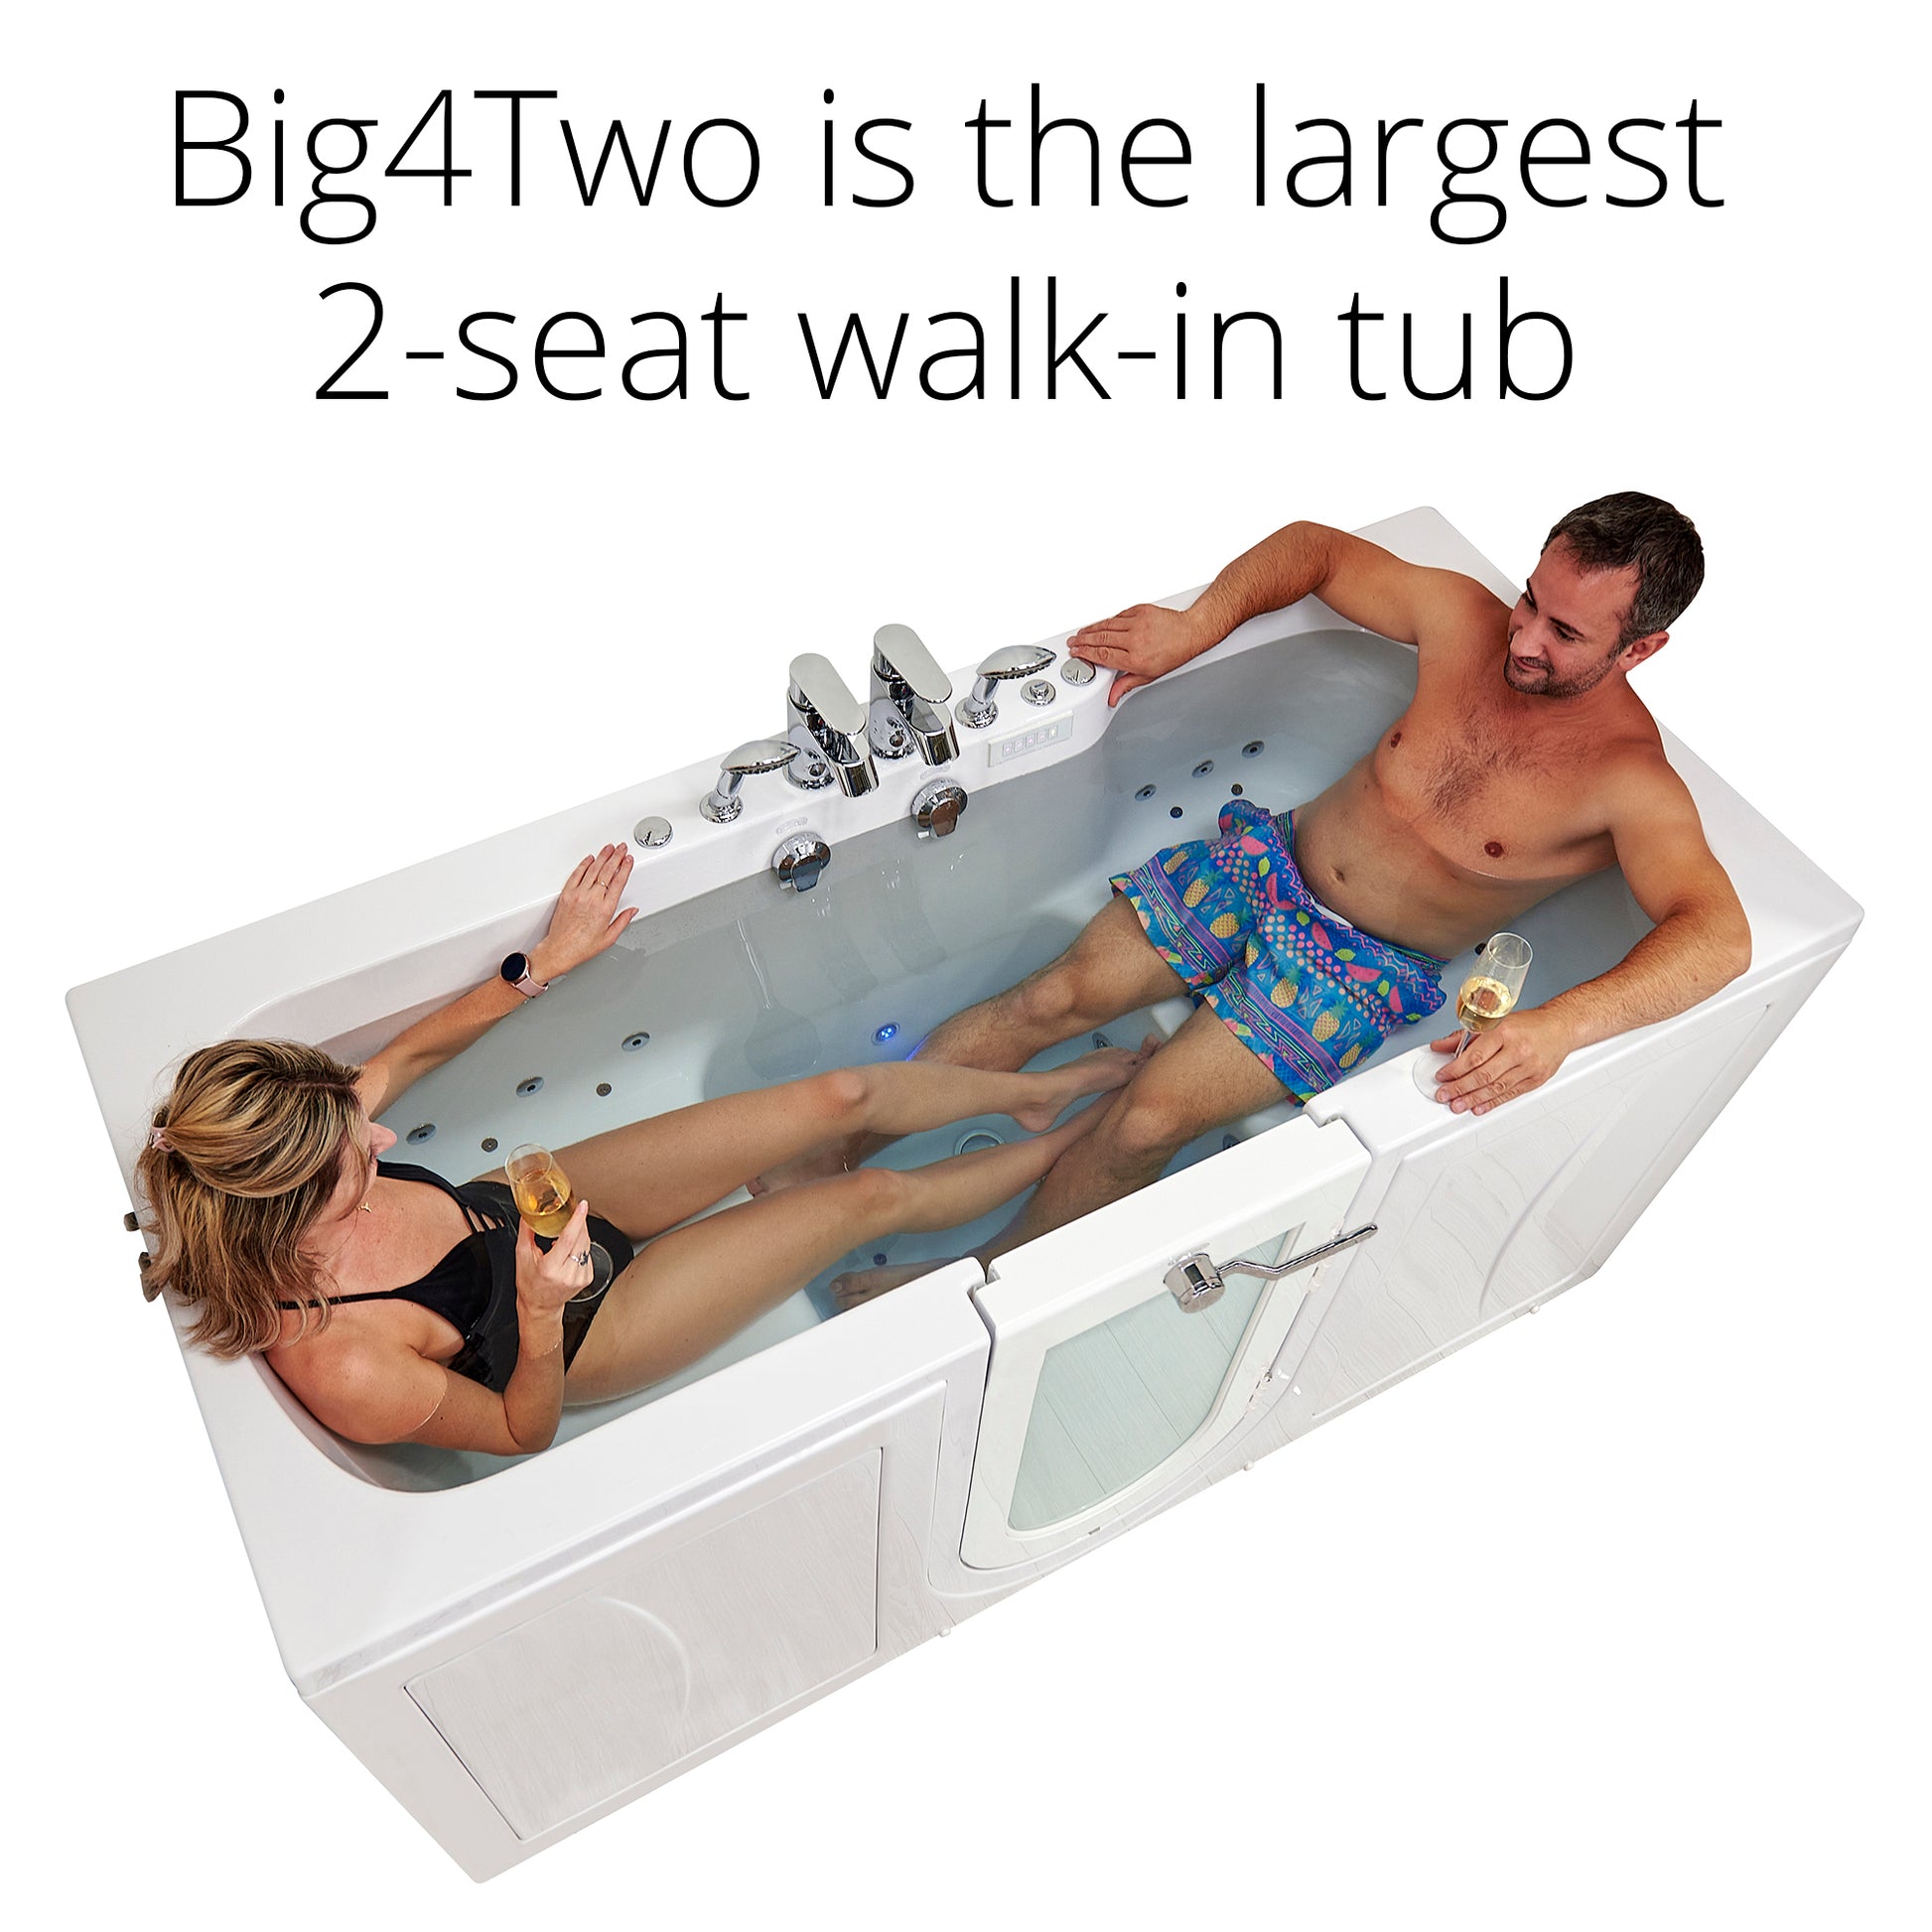 Big4Two Acrylic Outward Swing Door Walk-In Bathtub